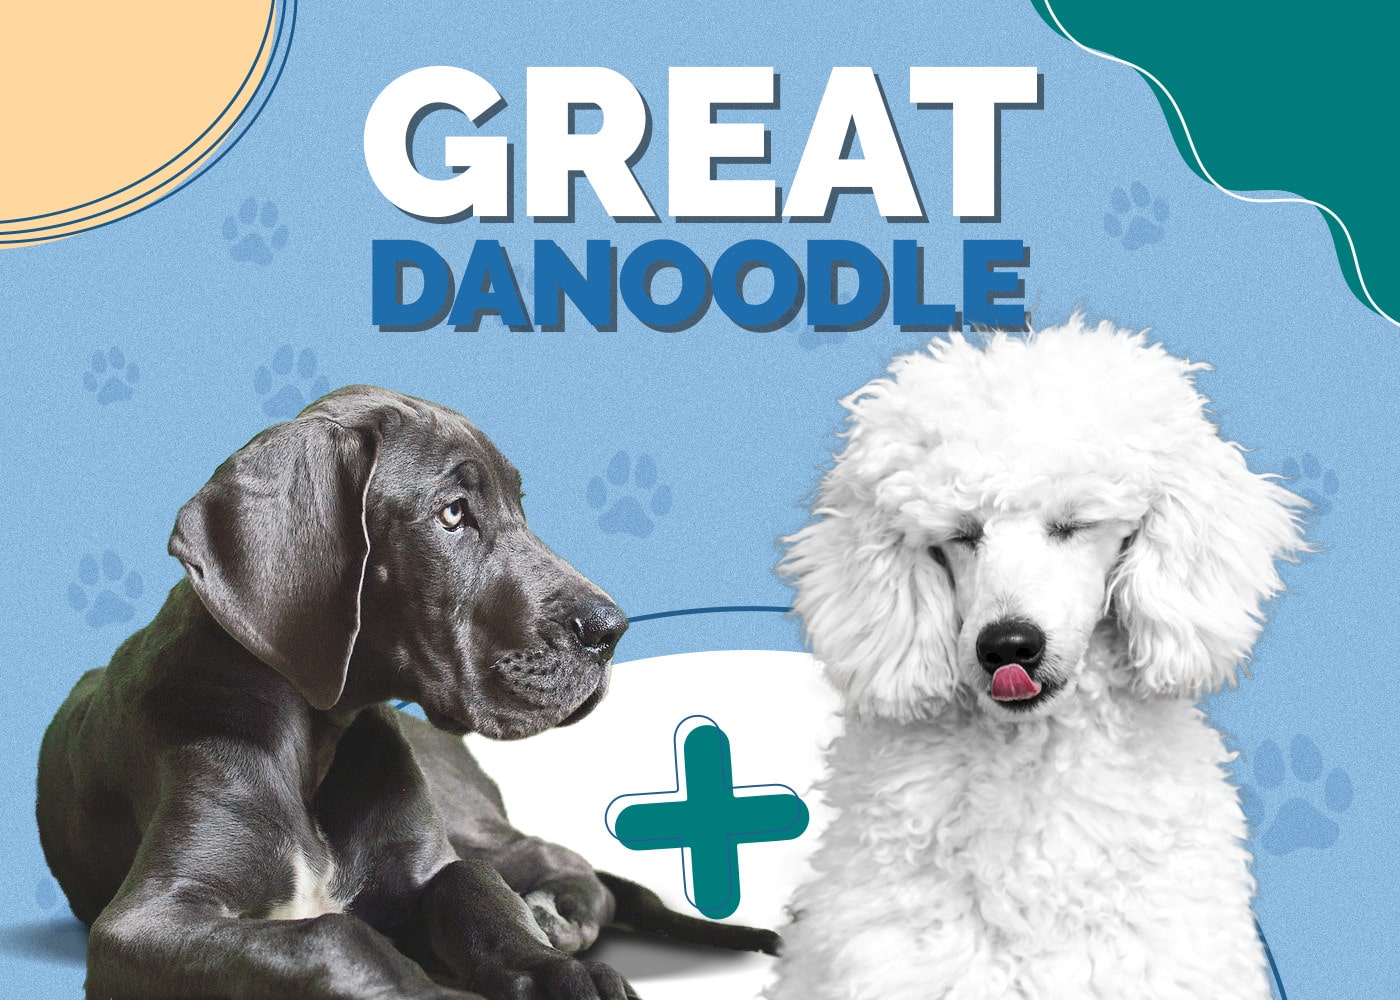 Great Danoodle (Great Dane & Poodle Mix)